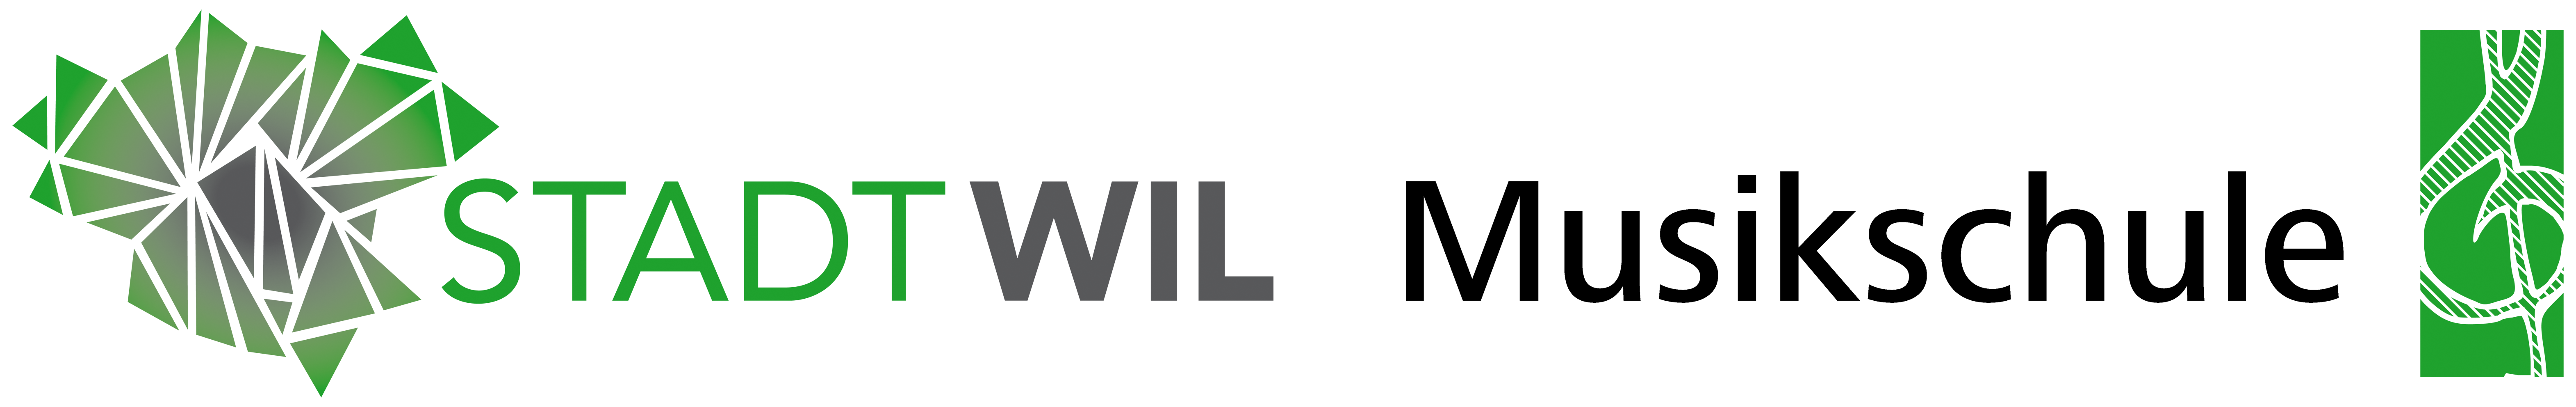 mswil logo